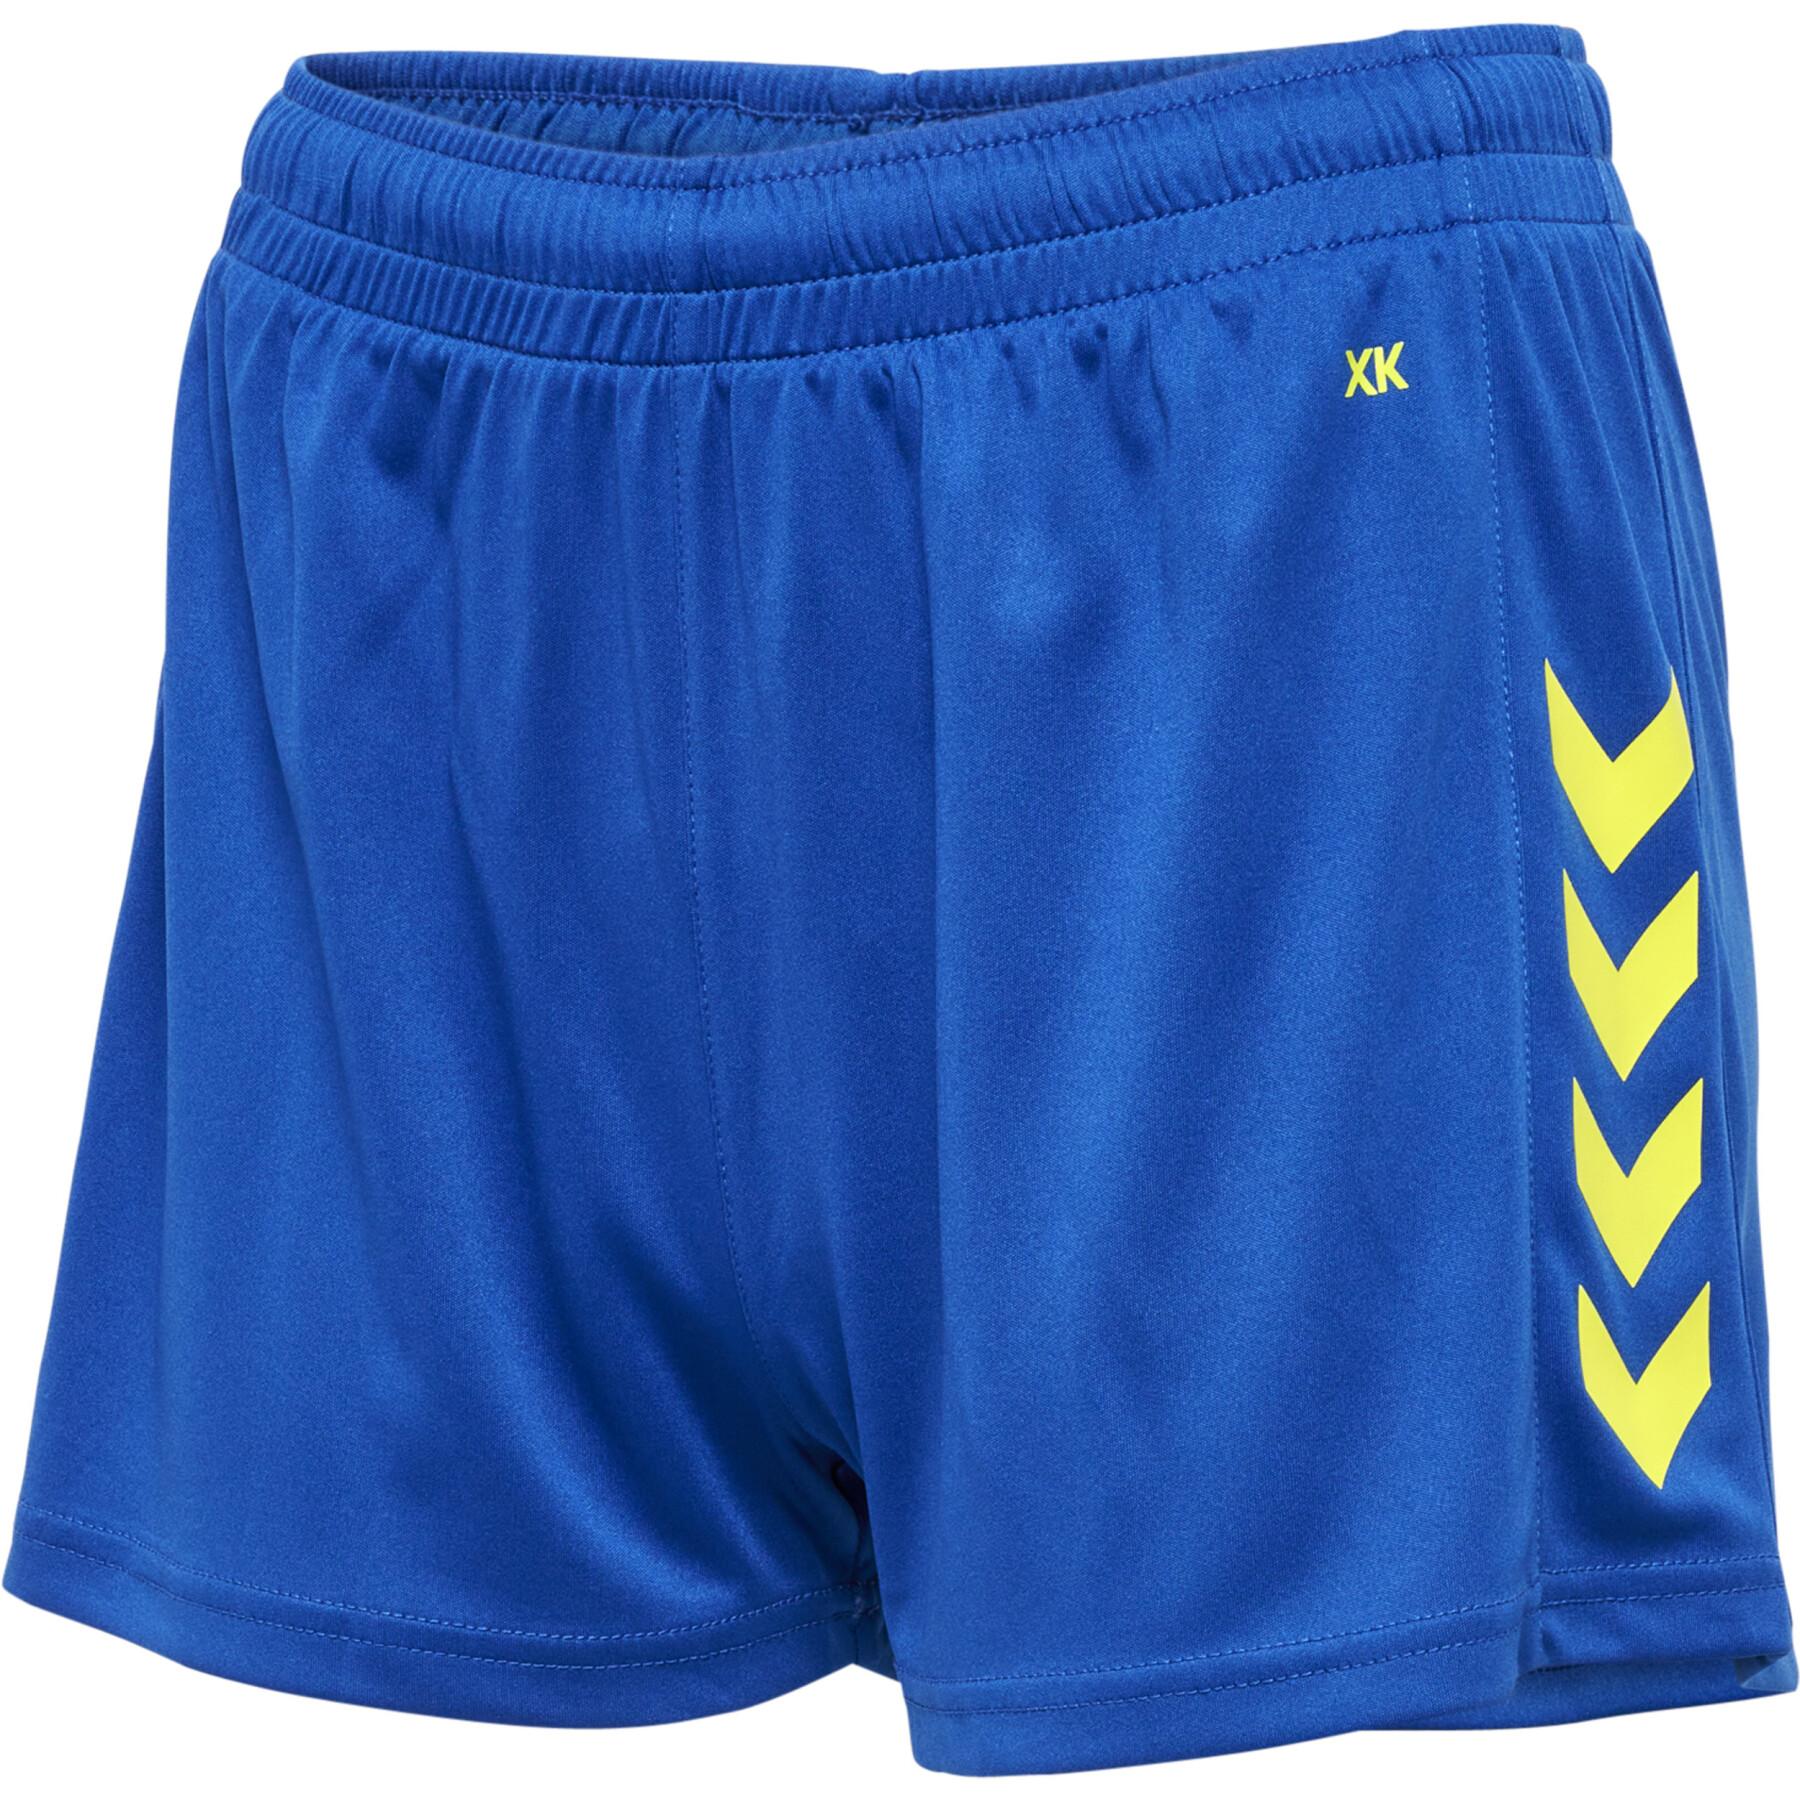 heilig detectie zoom Women's polyester shorts Hummel Core XK - Hummel - Brands - Handball wear